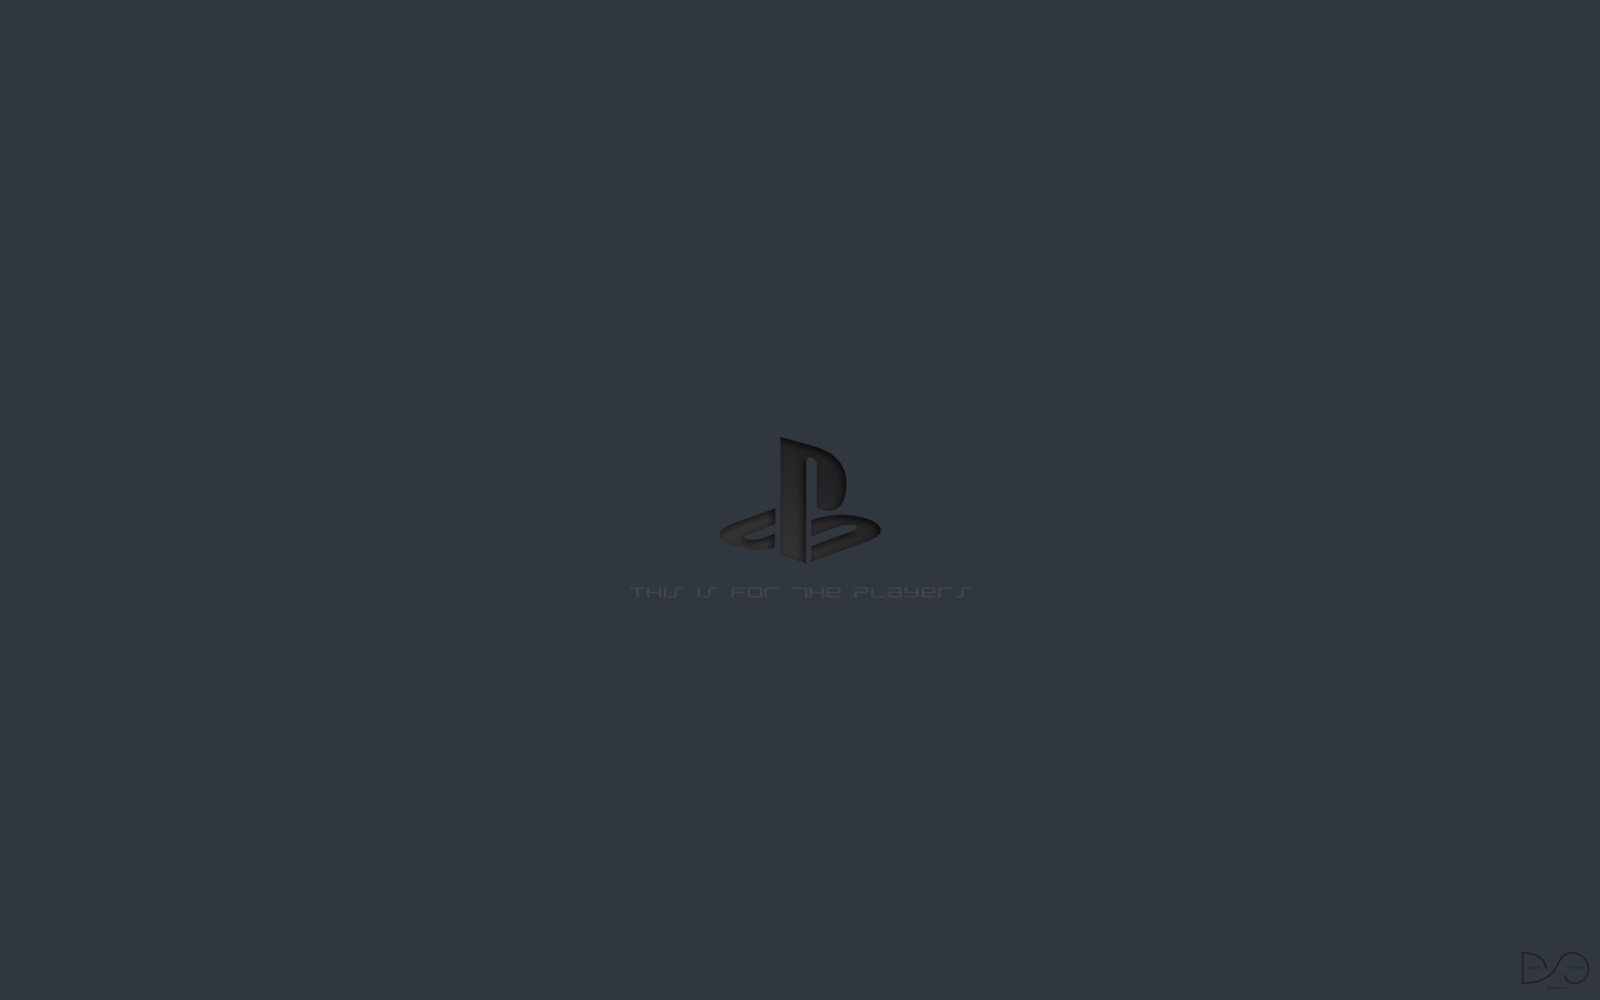 Playstation Logo Wallpaper by dantescottie on